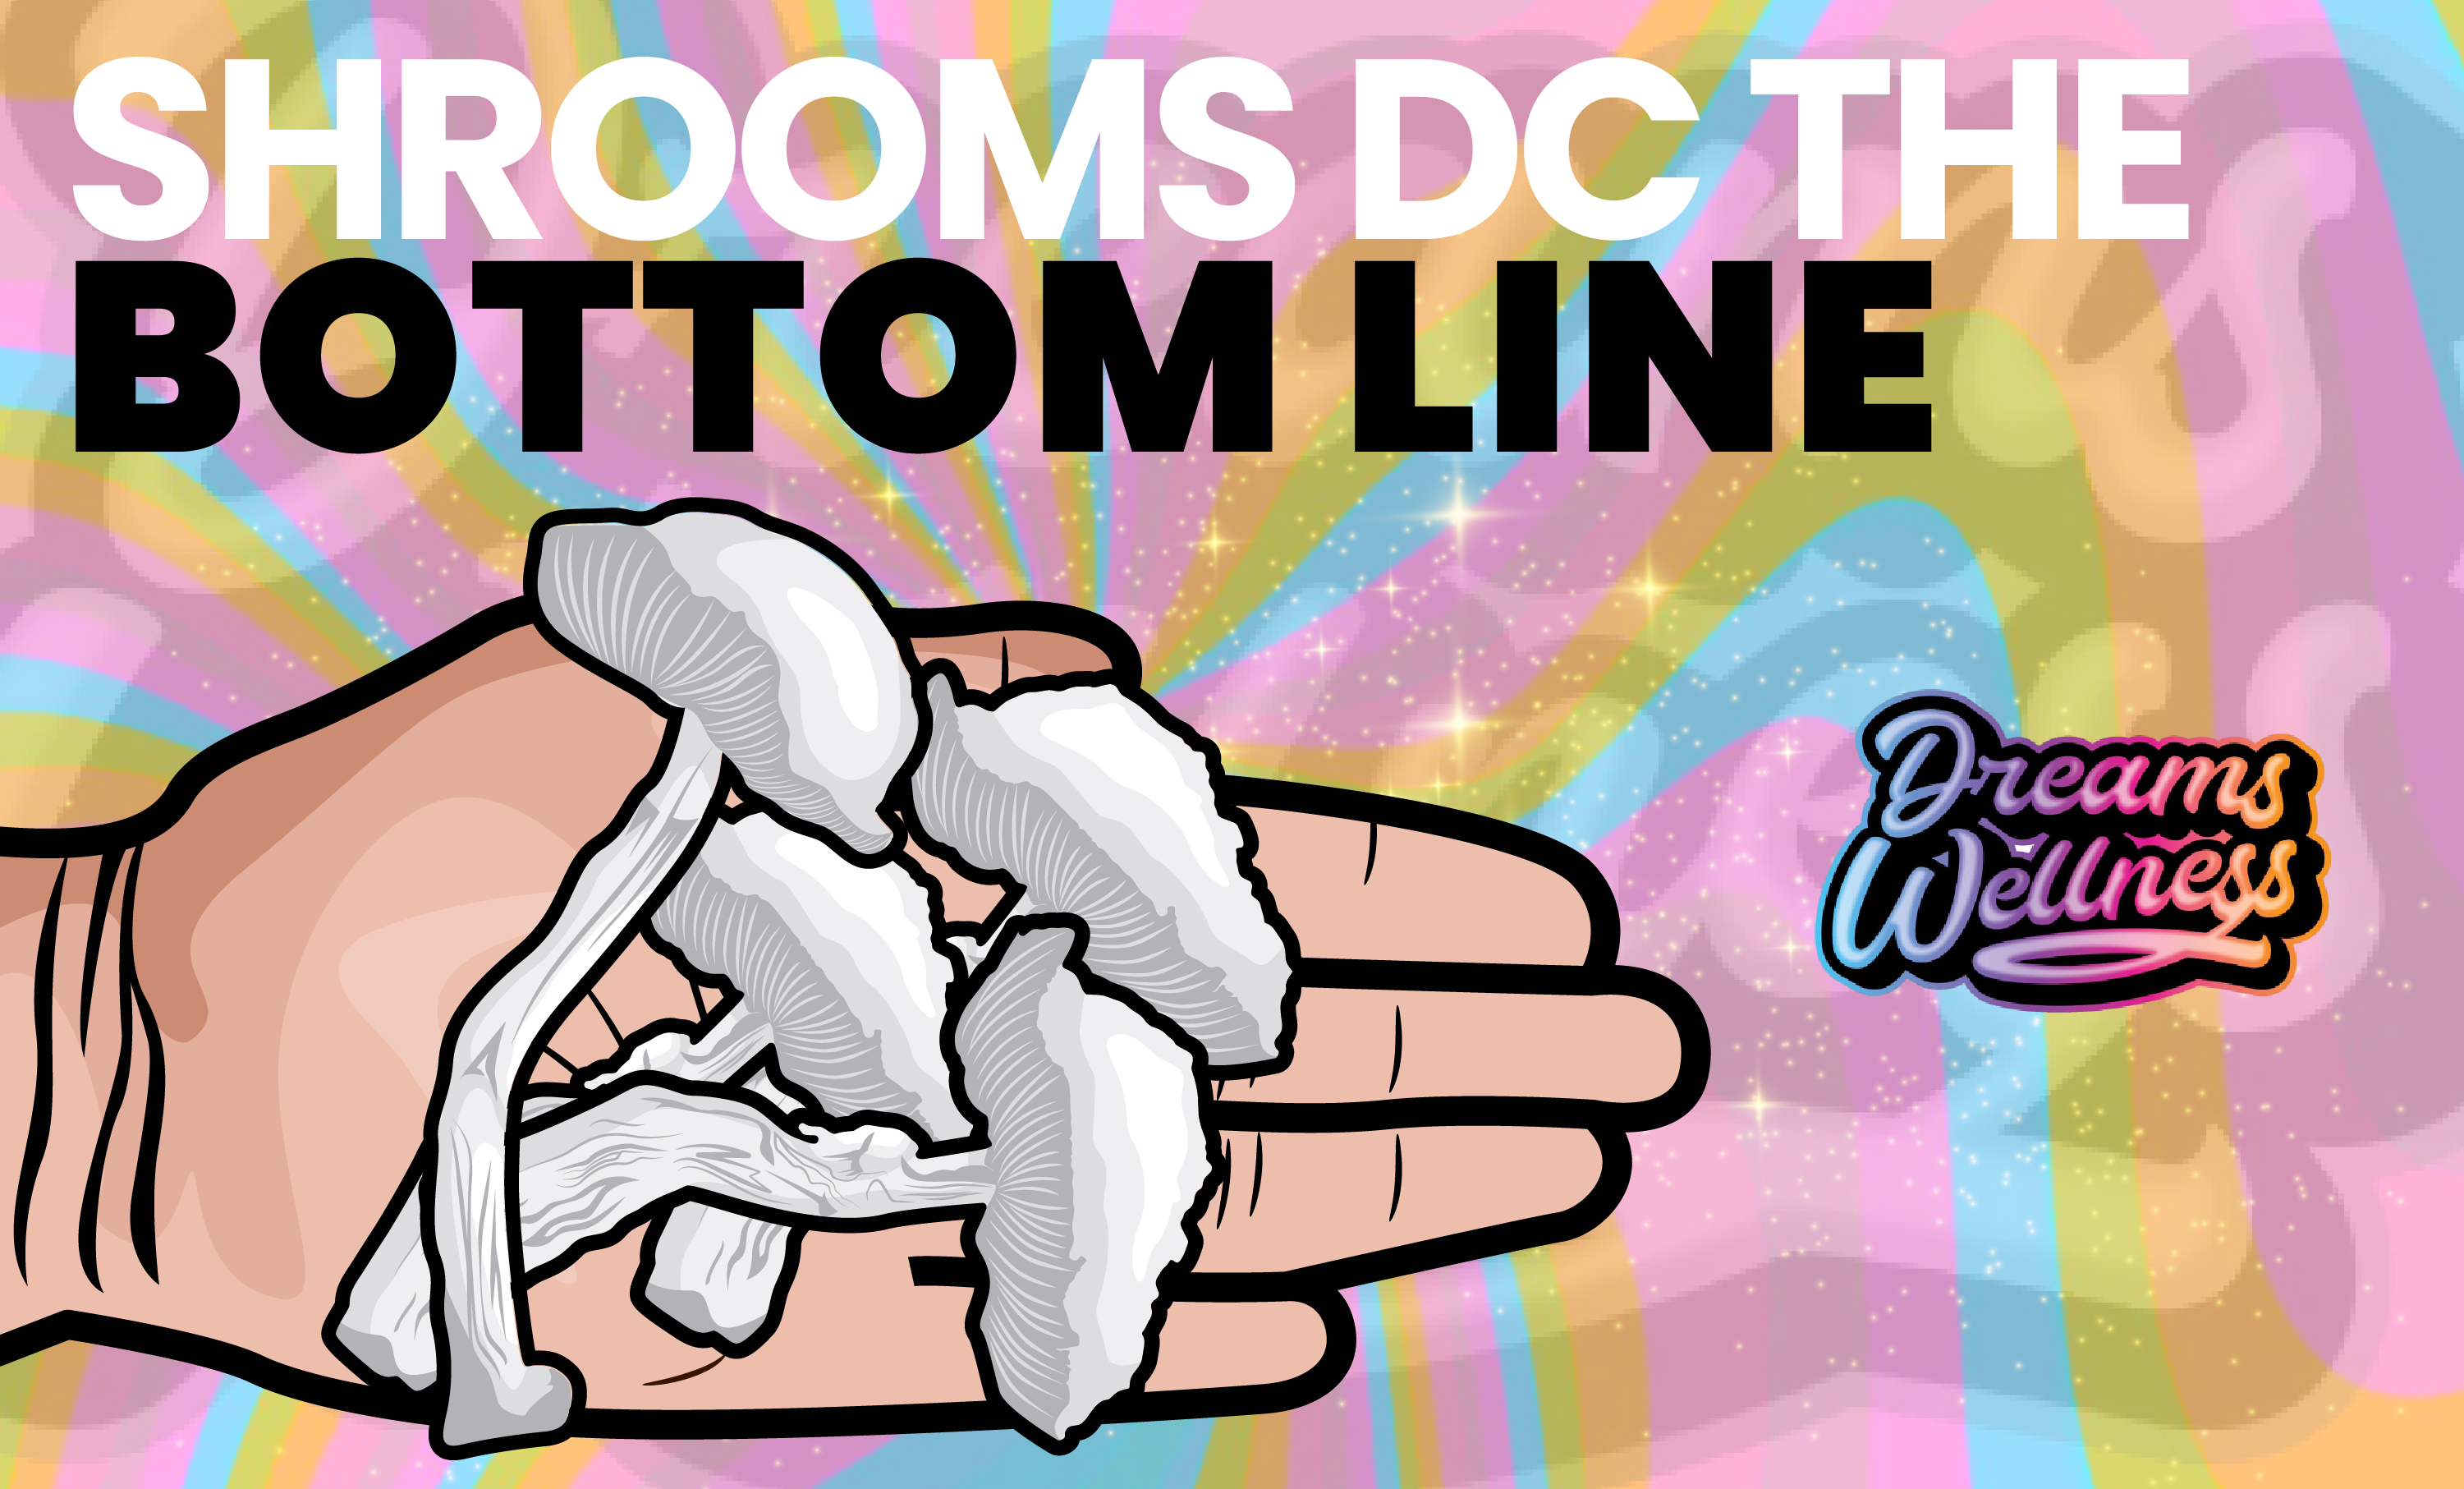 shrooms dc - the bottomline